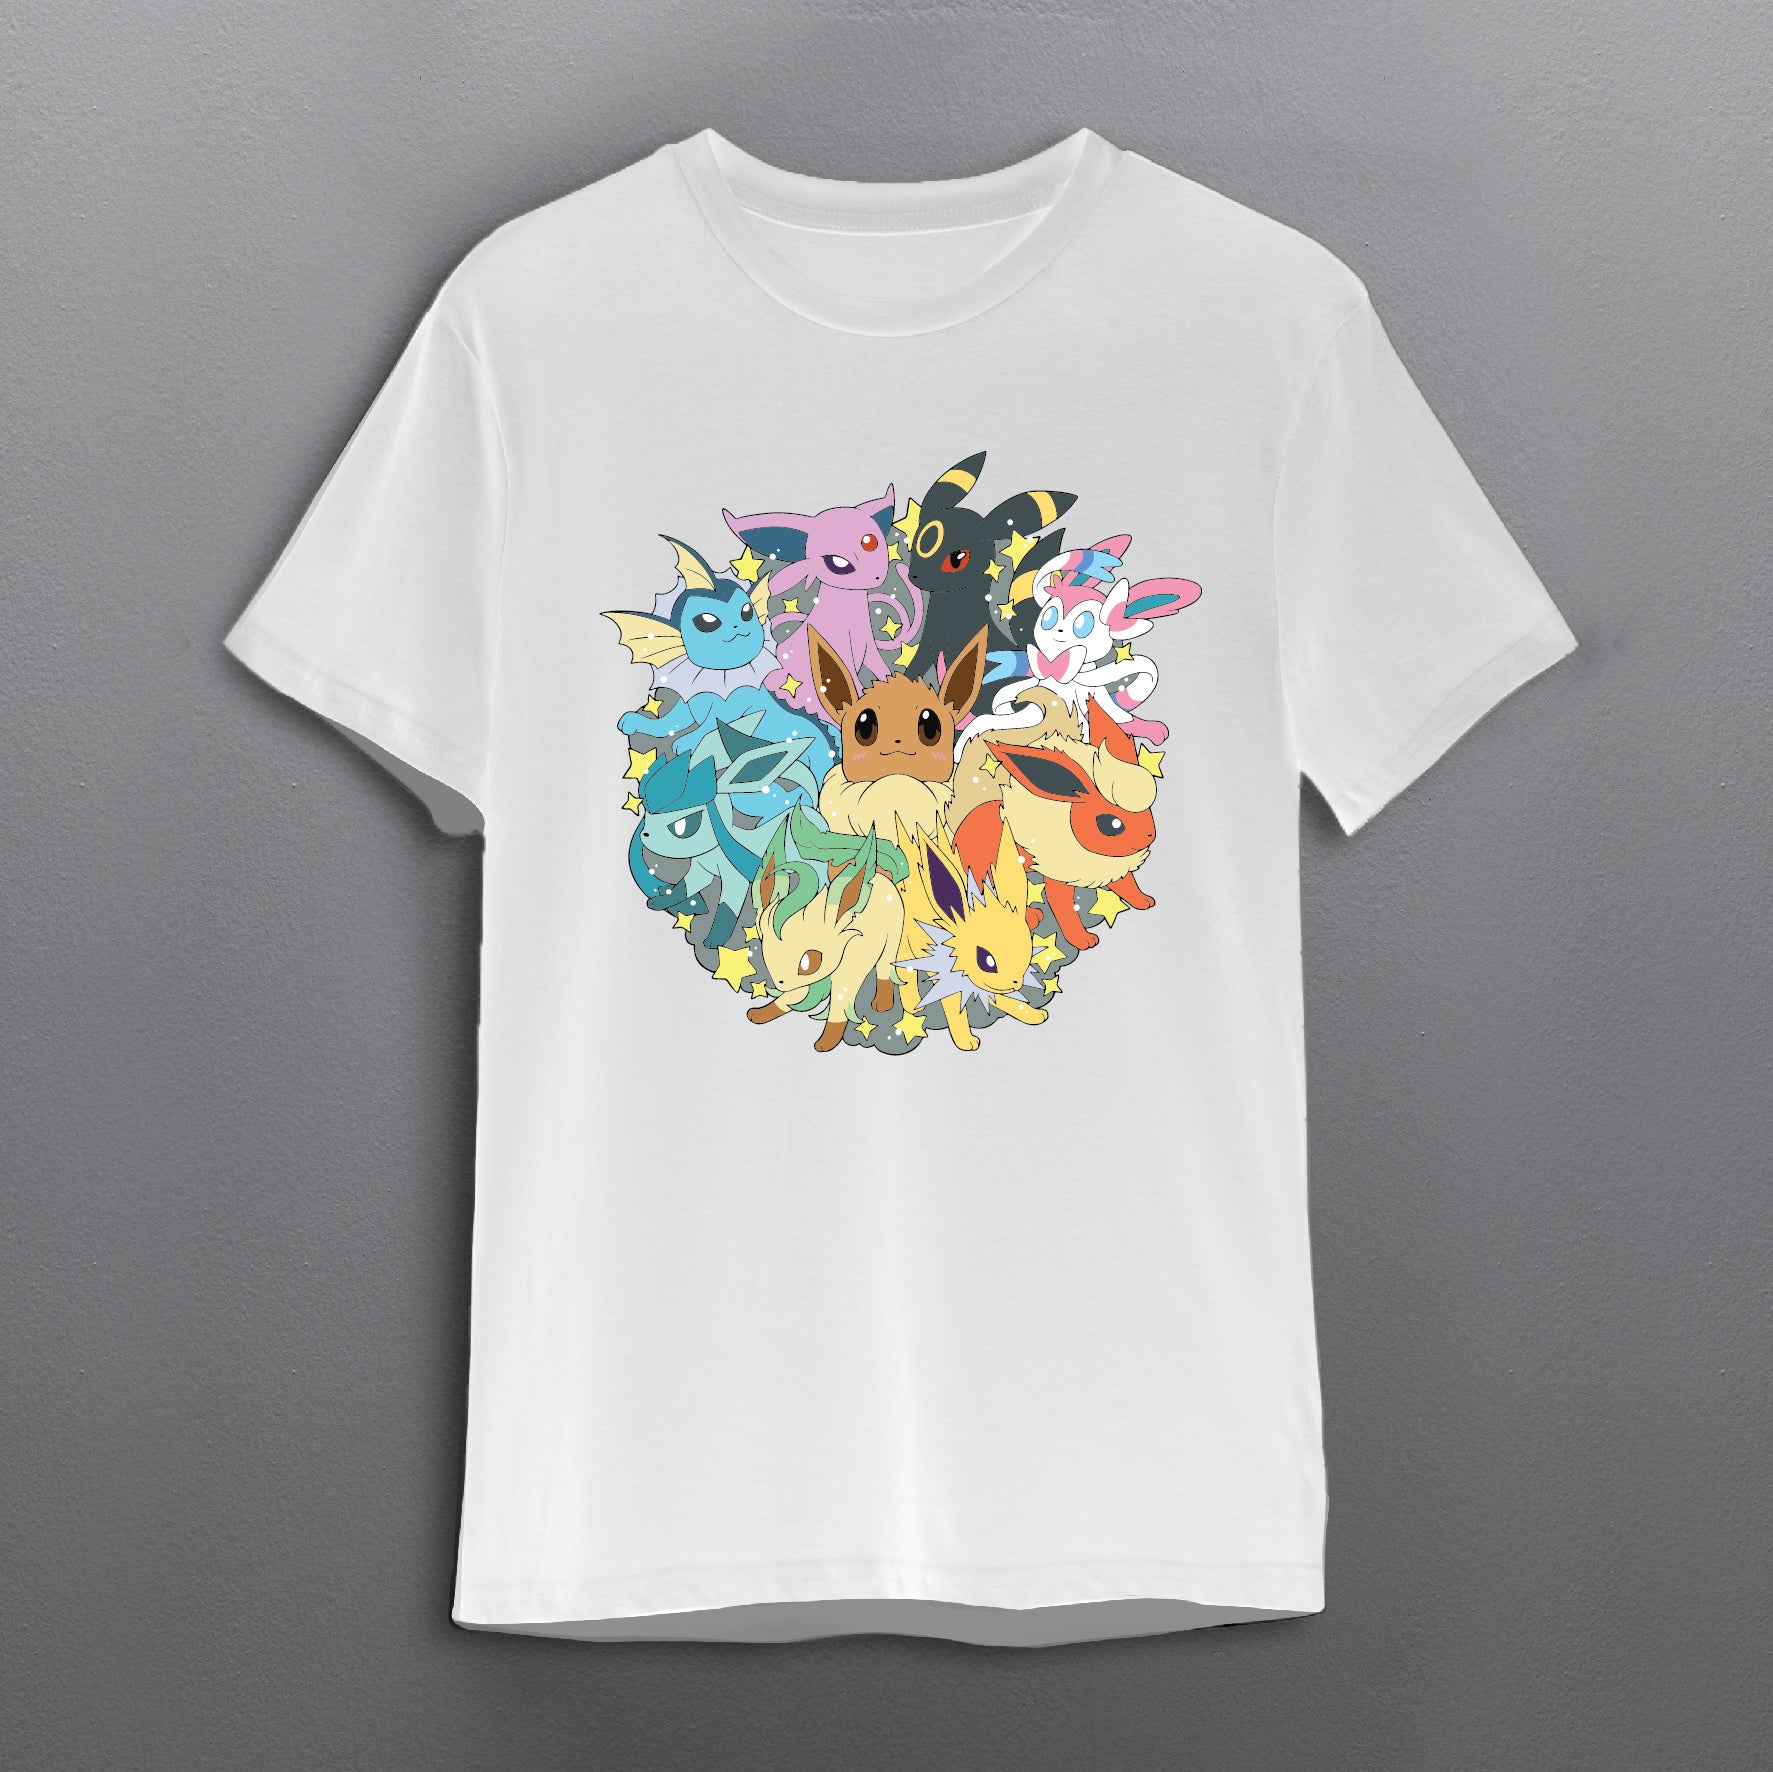 Eeveelution T-Shirt - Pokemon T-Shirt Collection White T-Shirt / 3XL